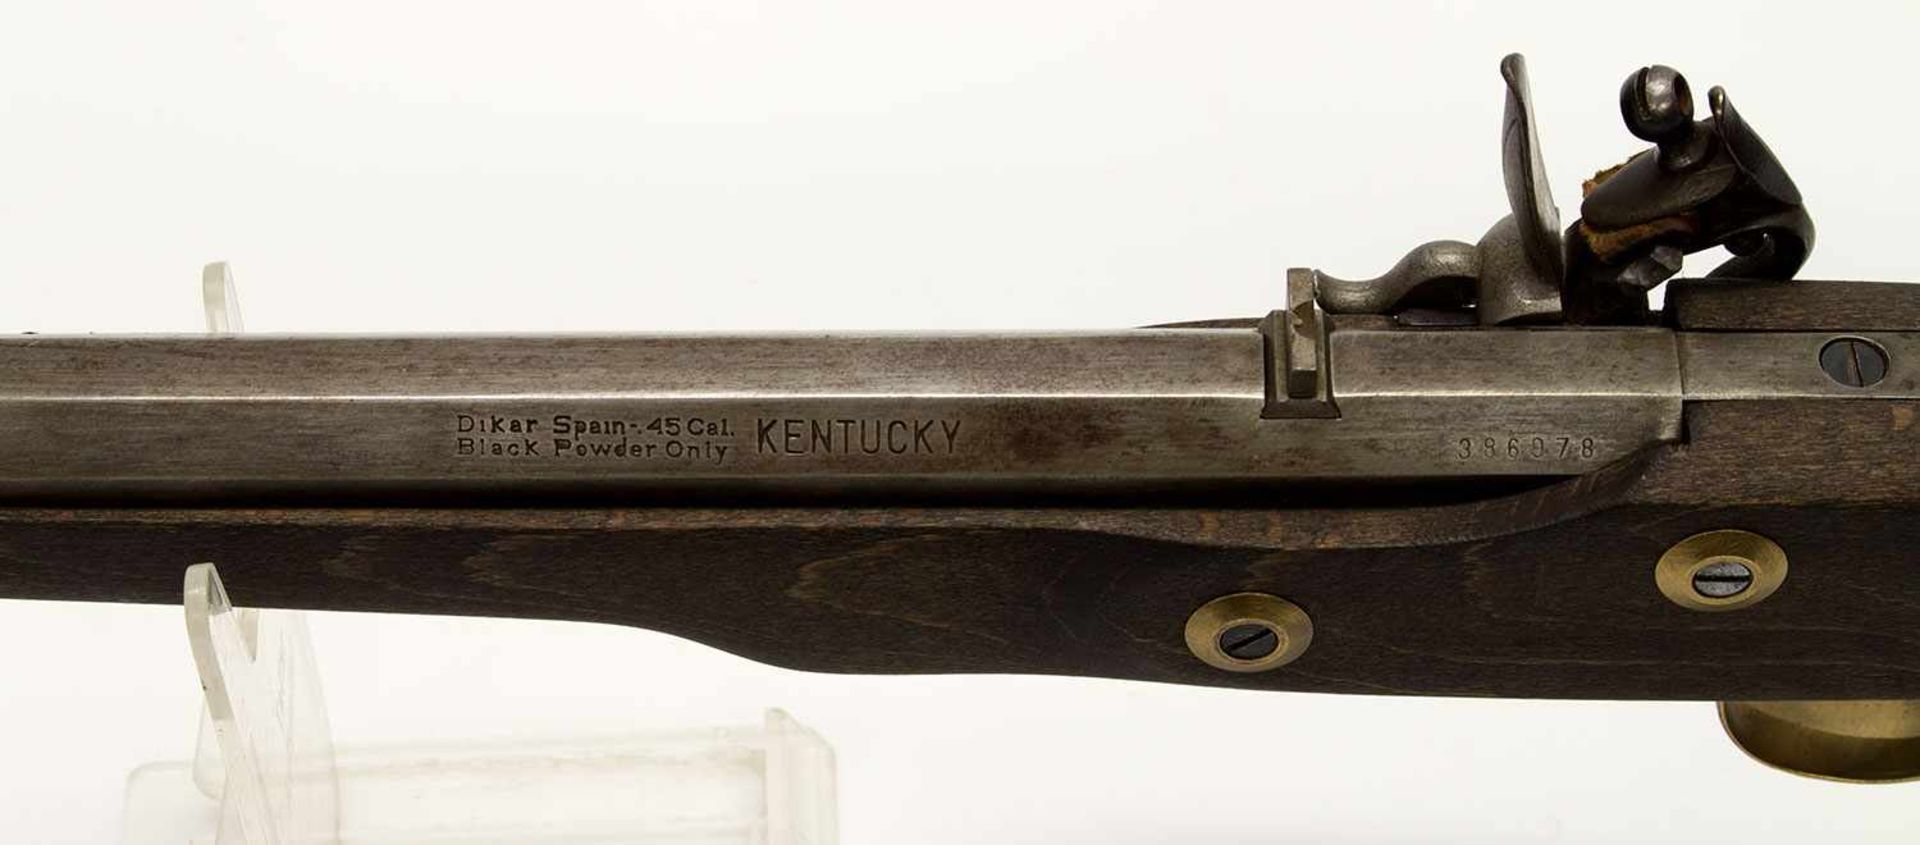 SteinschloßpistoleKentucky Black Powder, beschussfähig, Schäftung wohl später, L. 40 cm - Bild 3 aus 4